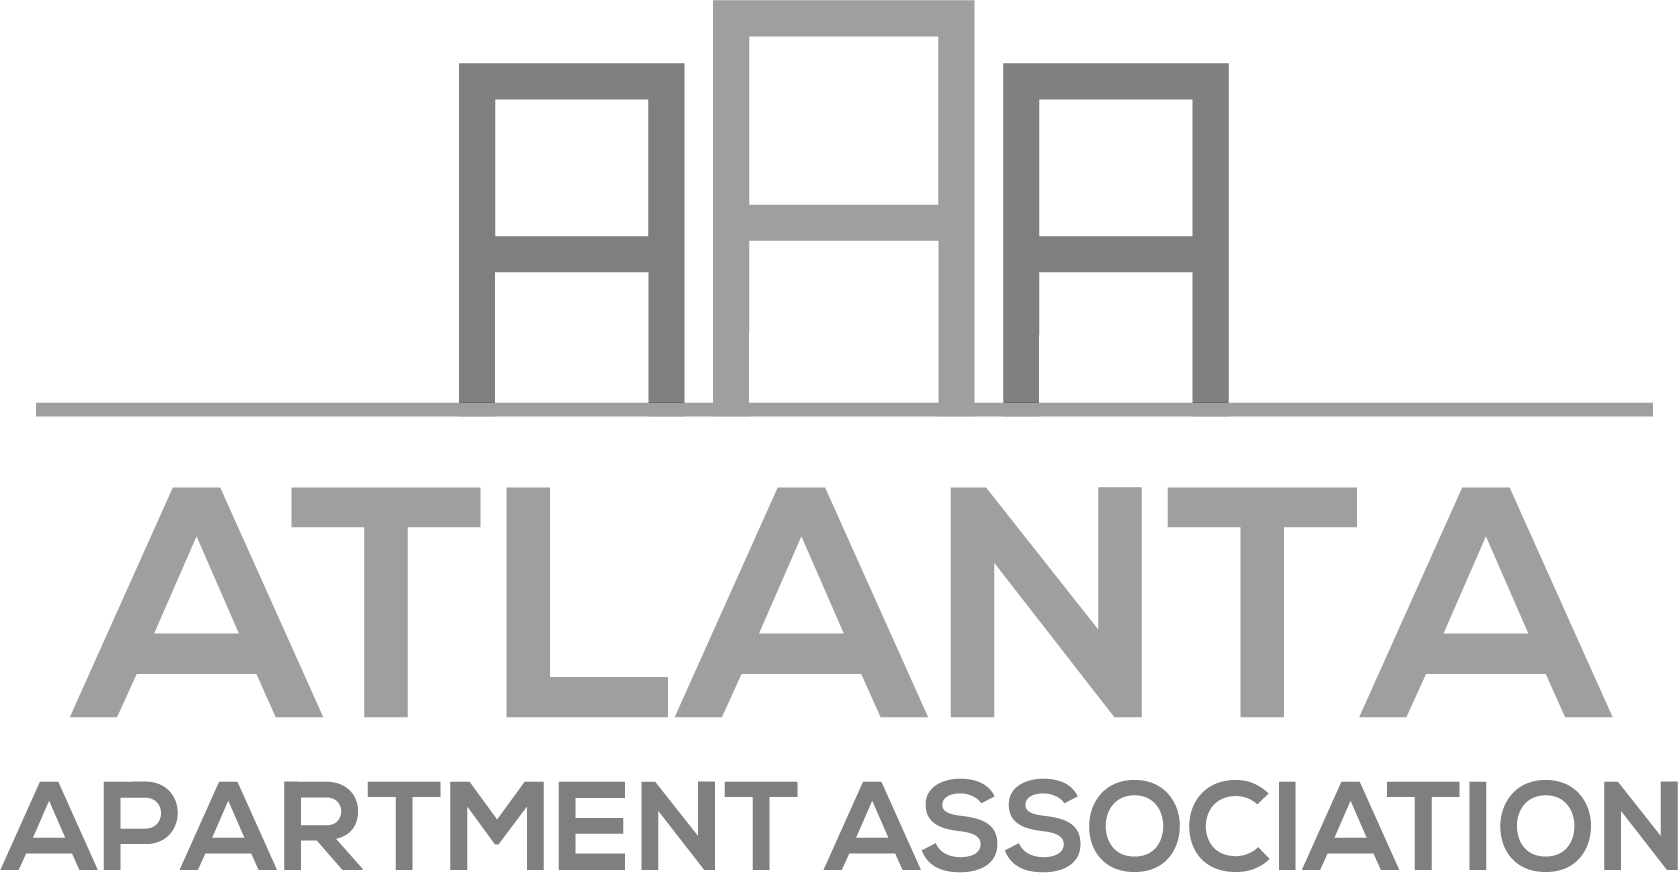 ParsonsRoofing-Organizations-Atlanta-Apartment-Association